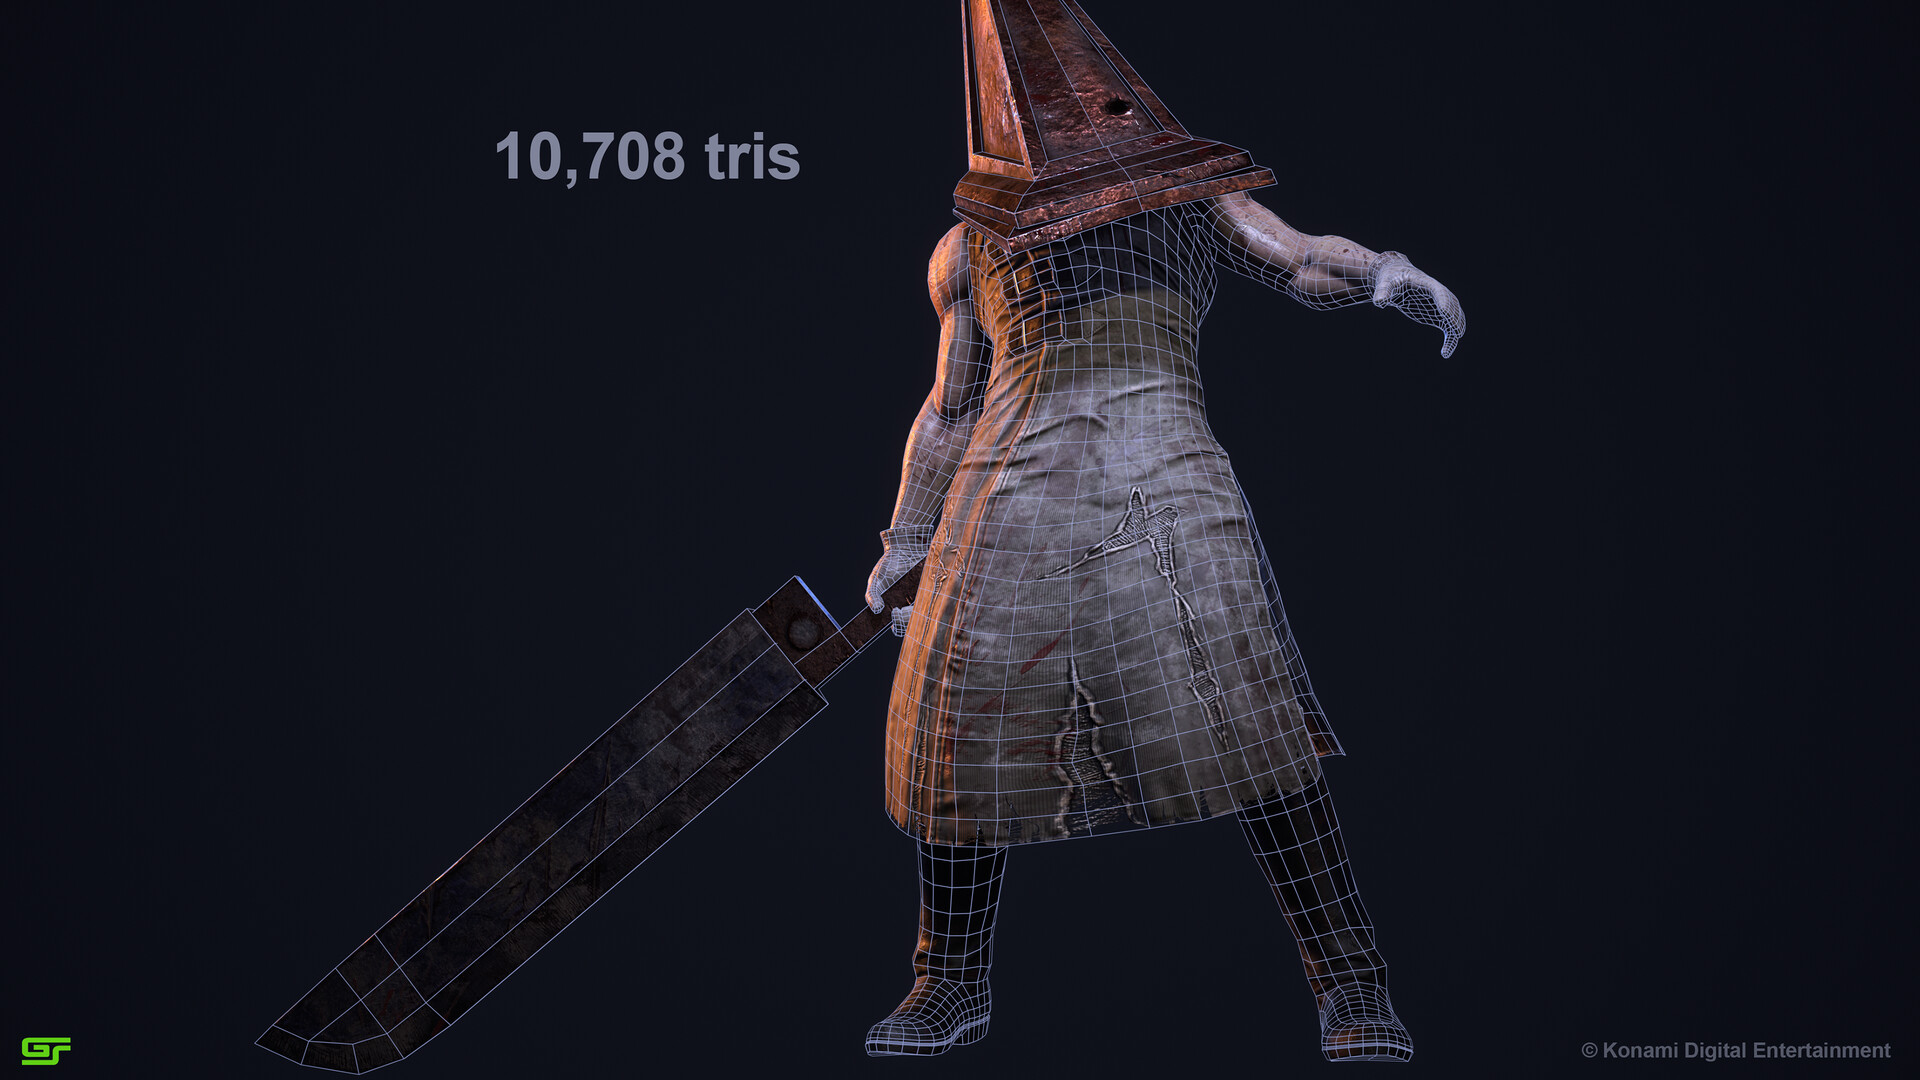 ArtStation - 3D Model  Silent Hill Pyramid Head's Hood and Sword